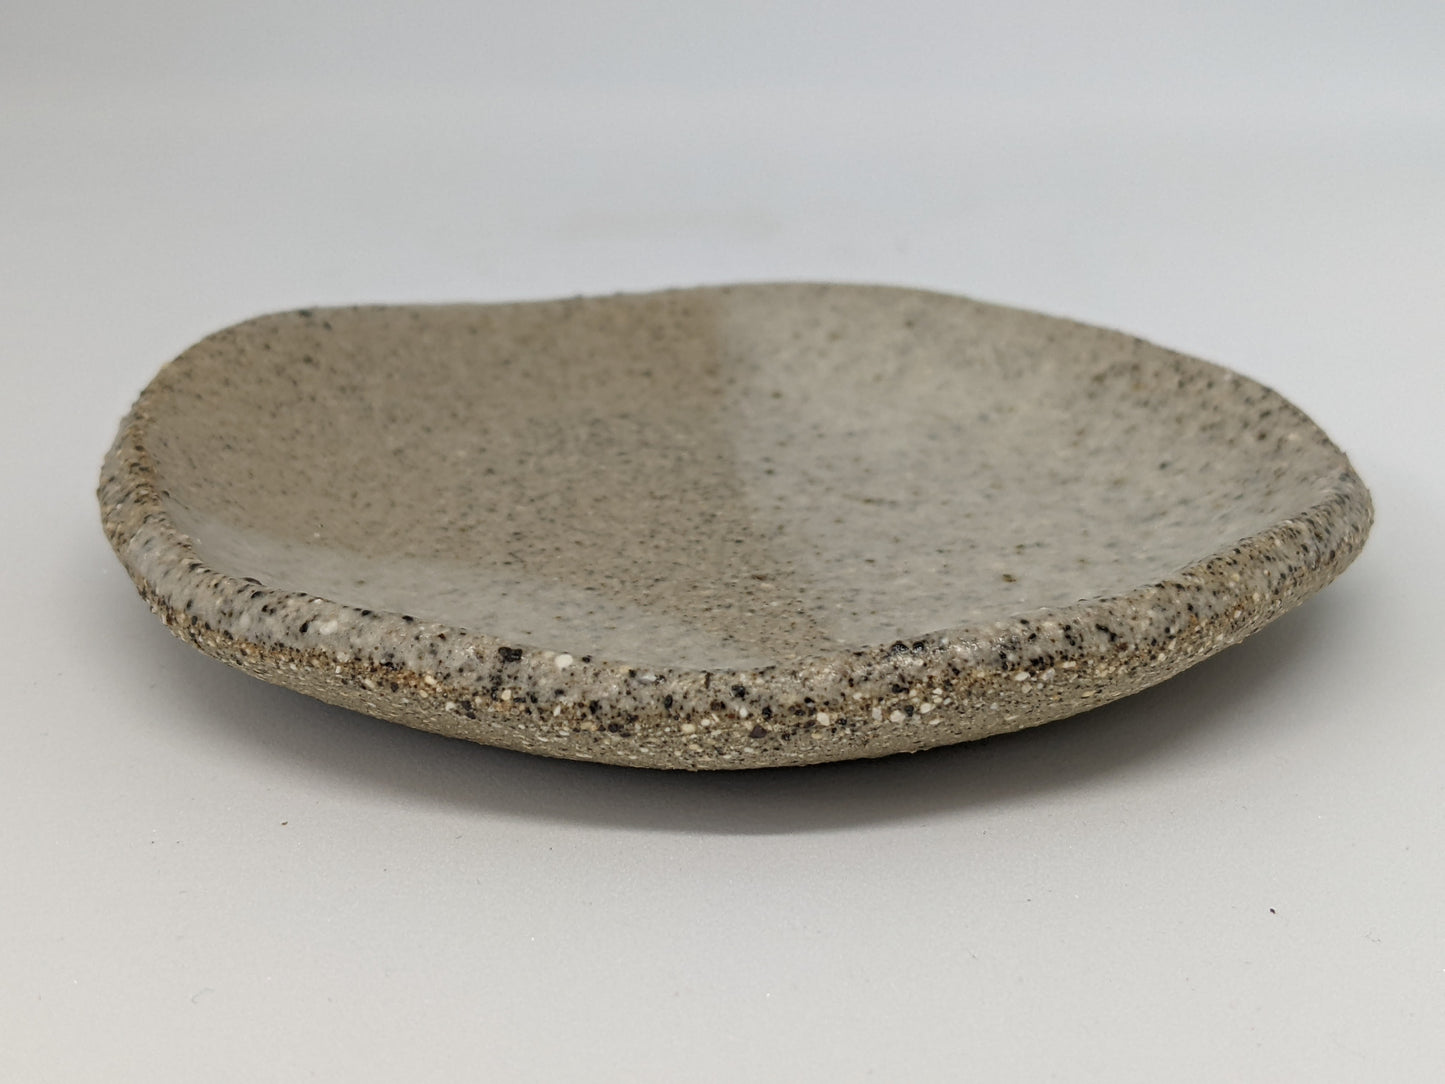 Earthy grey colored ceramic small tray